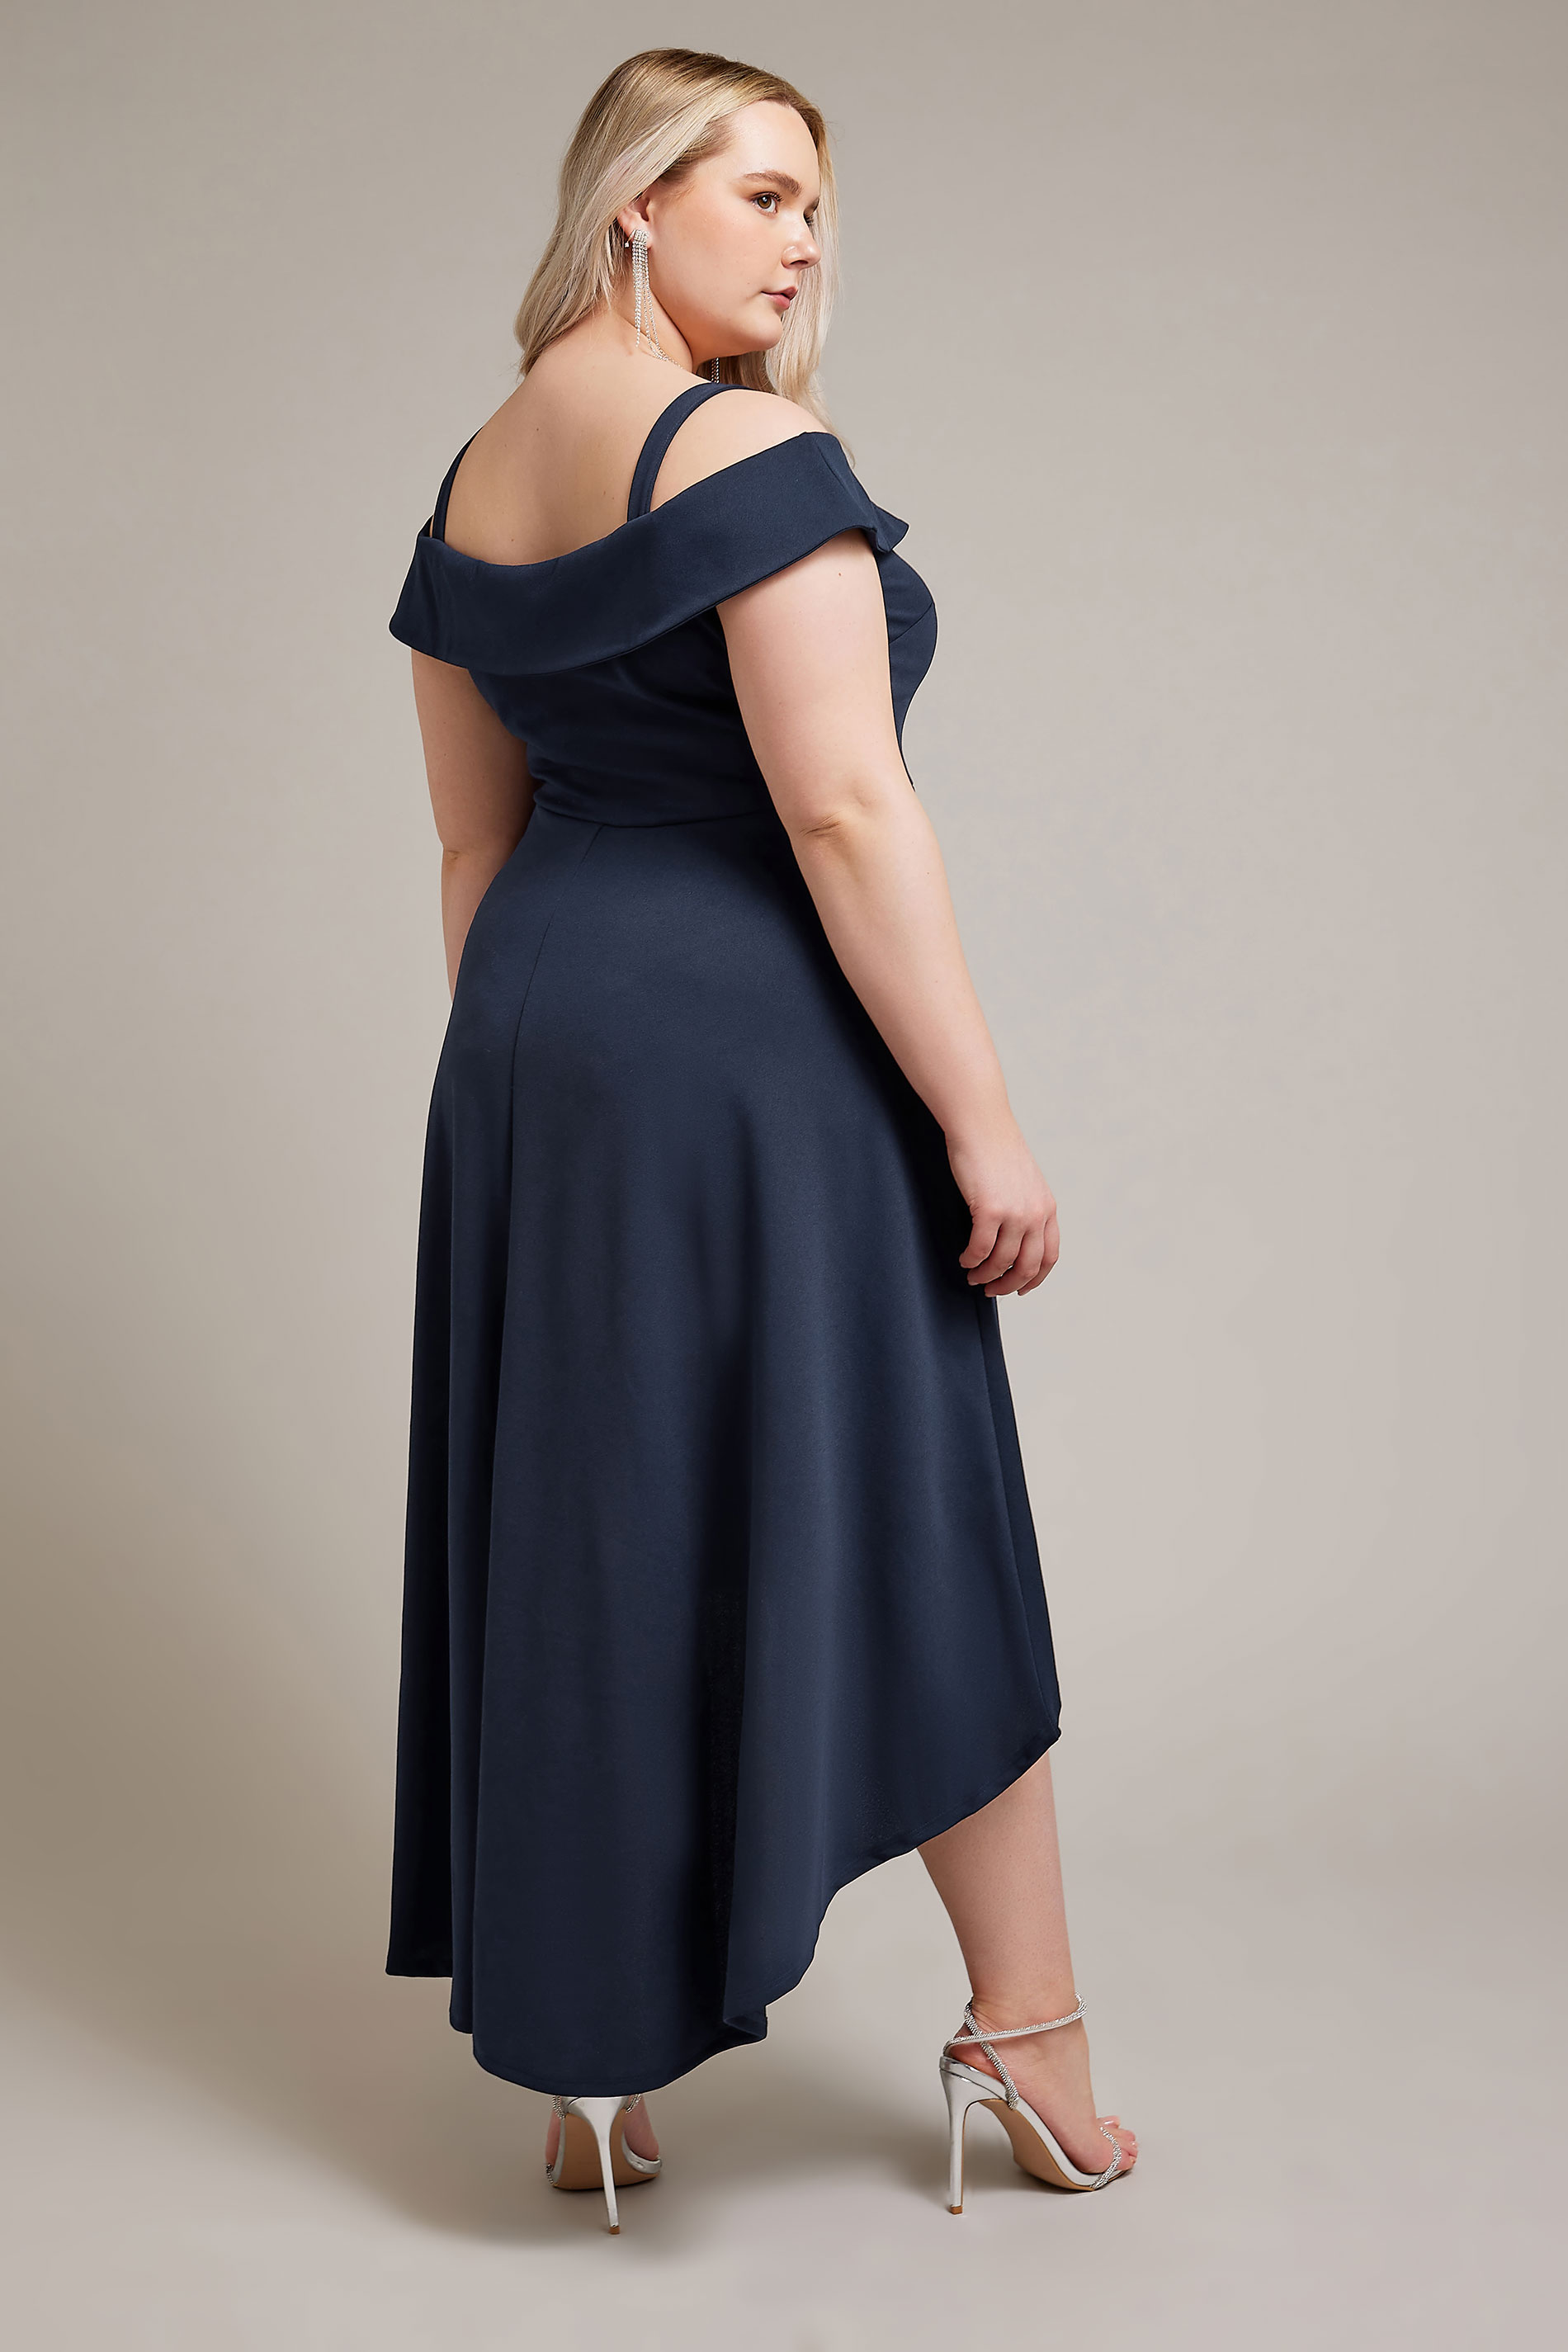 YOURS LONDON Plus Size Navy Blue Bardot Dipped Hem Dress | Yours Clothing 3